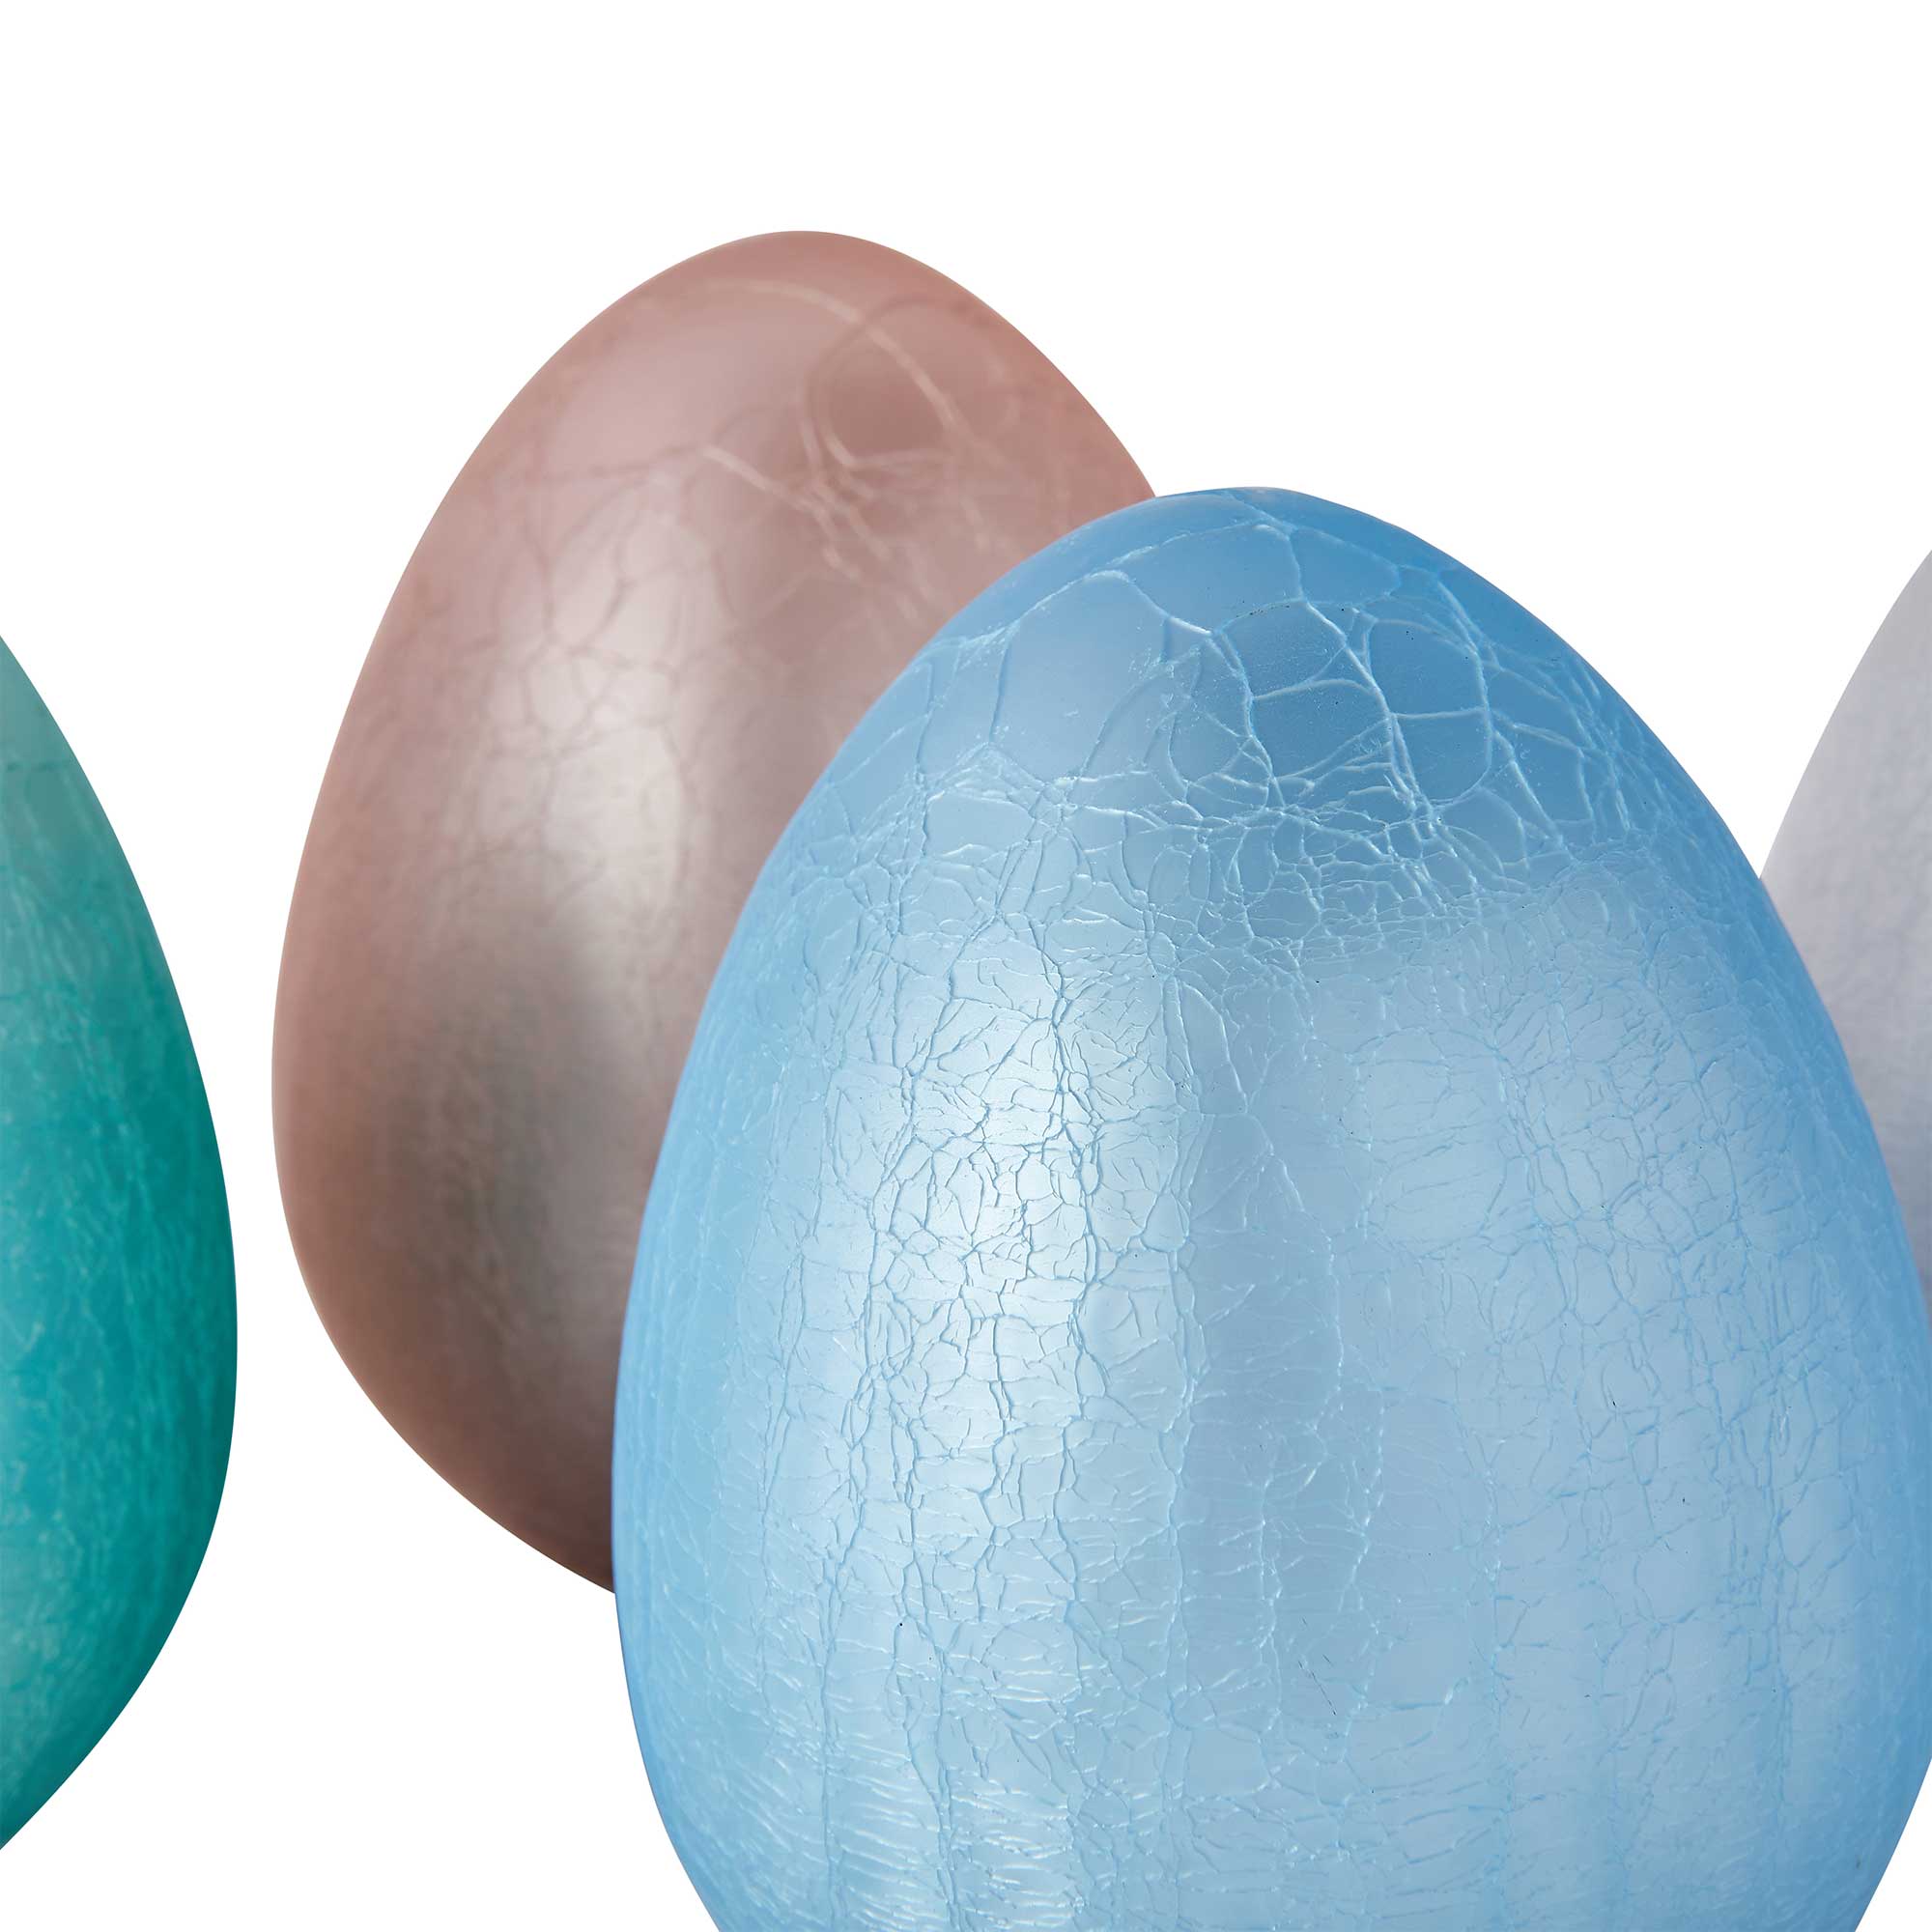 Crackle Detail on Small Easter Egg Set